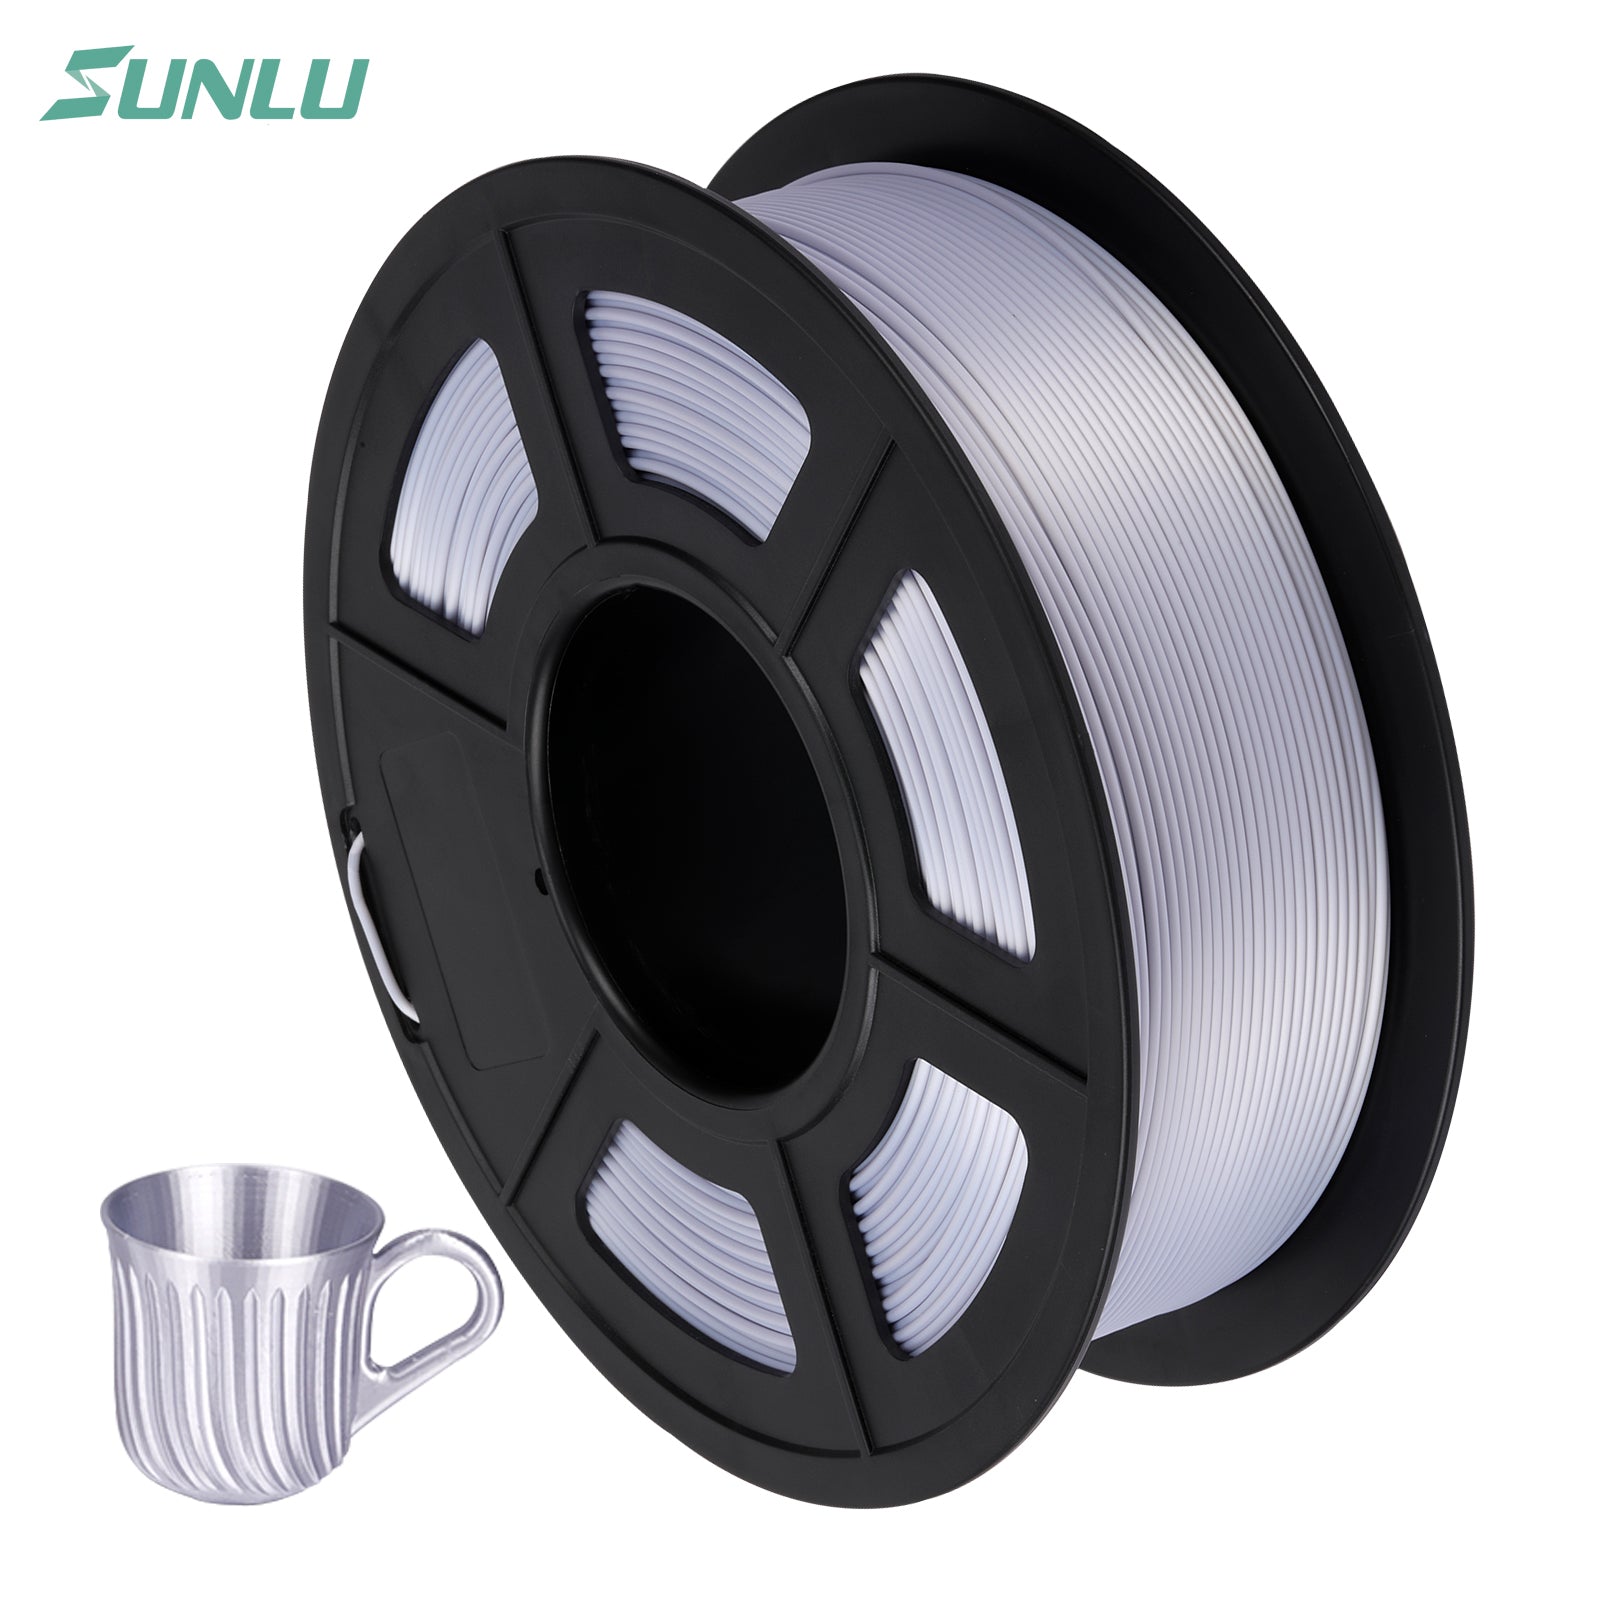 1kg Spool SUNLU Silk PLA 3D Printer Filament 1.75mm diameter printing consumables for most FDM 3D printers. Silver